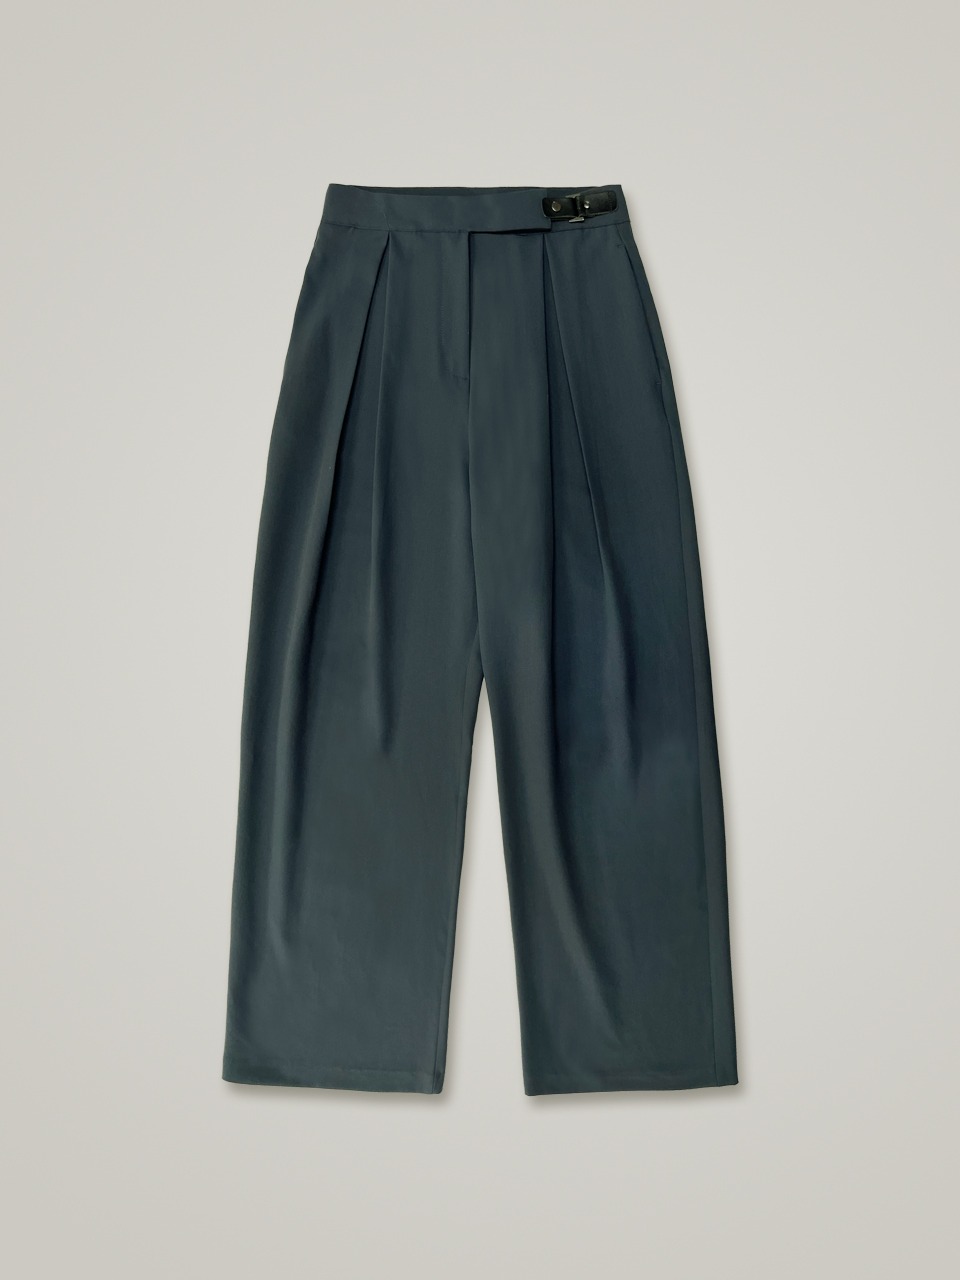 comos 774 buckle detail pleated slacks (ash grey)